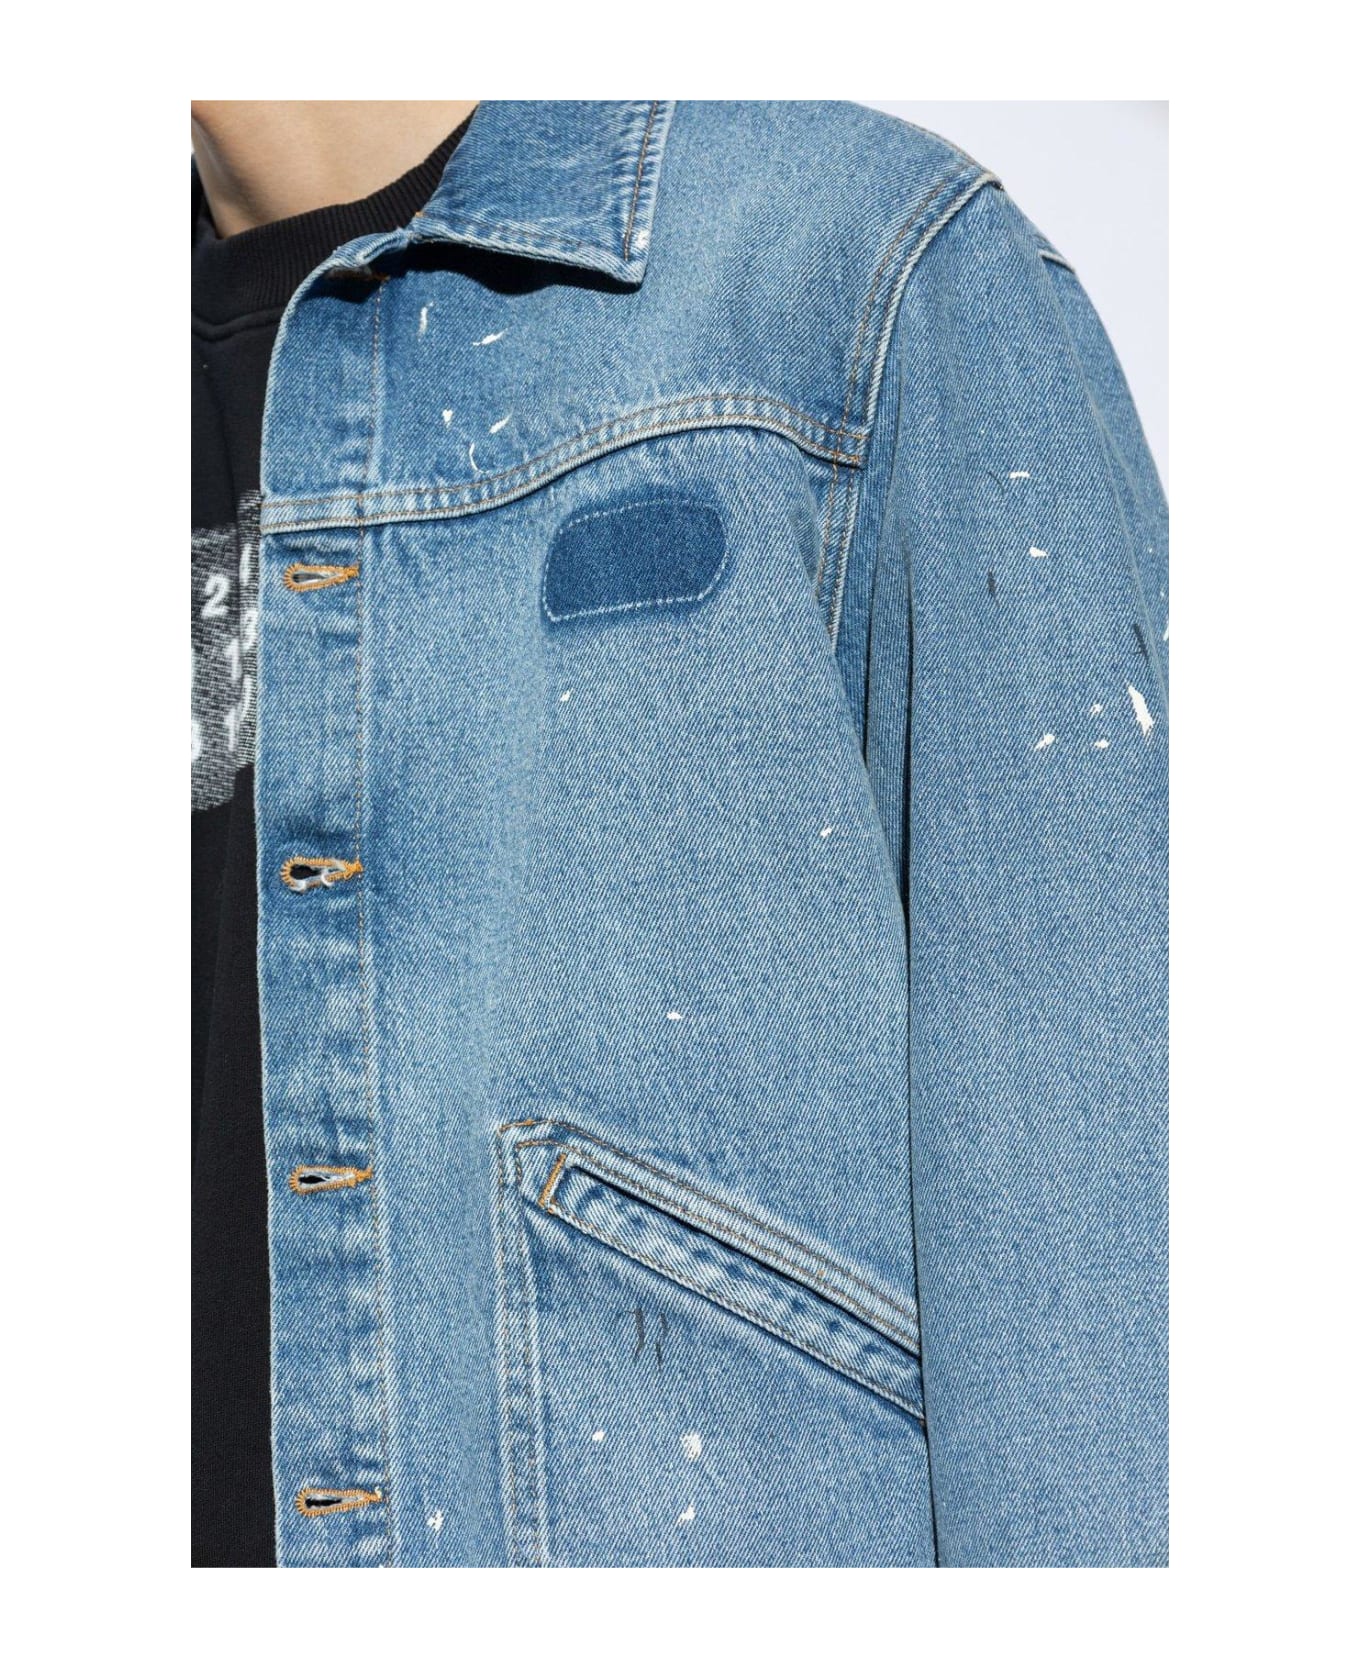 MM6 Maison Margiela Distressed Denim Jacket - BLUE ジャケット